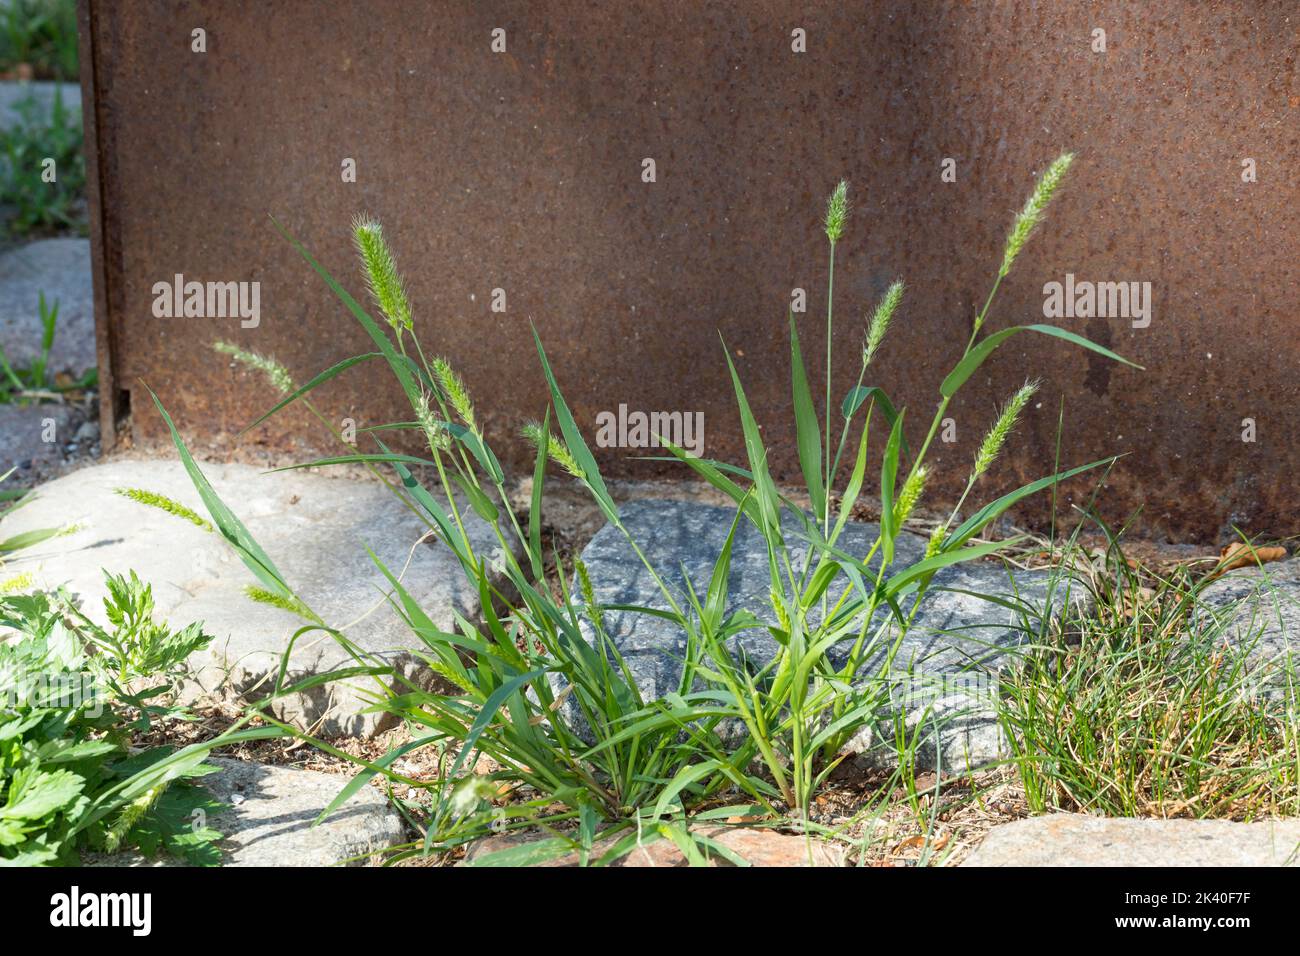 bottle grass, green bristle-grass, green foxtail (Setaria viridis), growing on a pavement, Germany Stock Photo